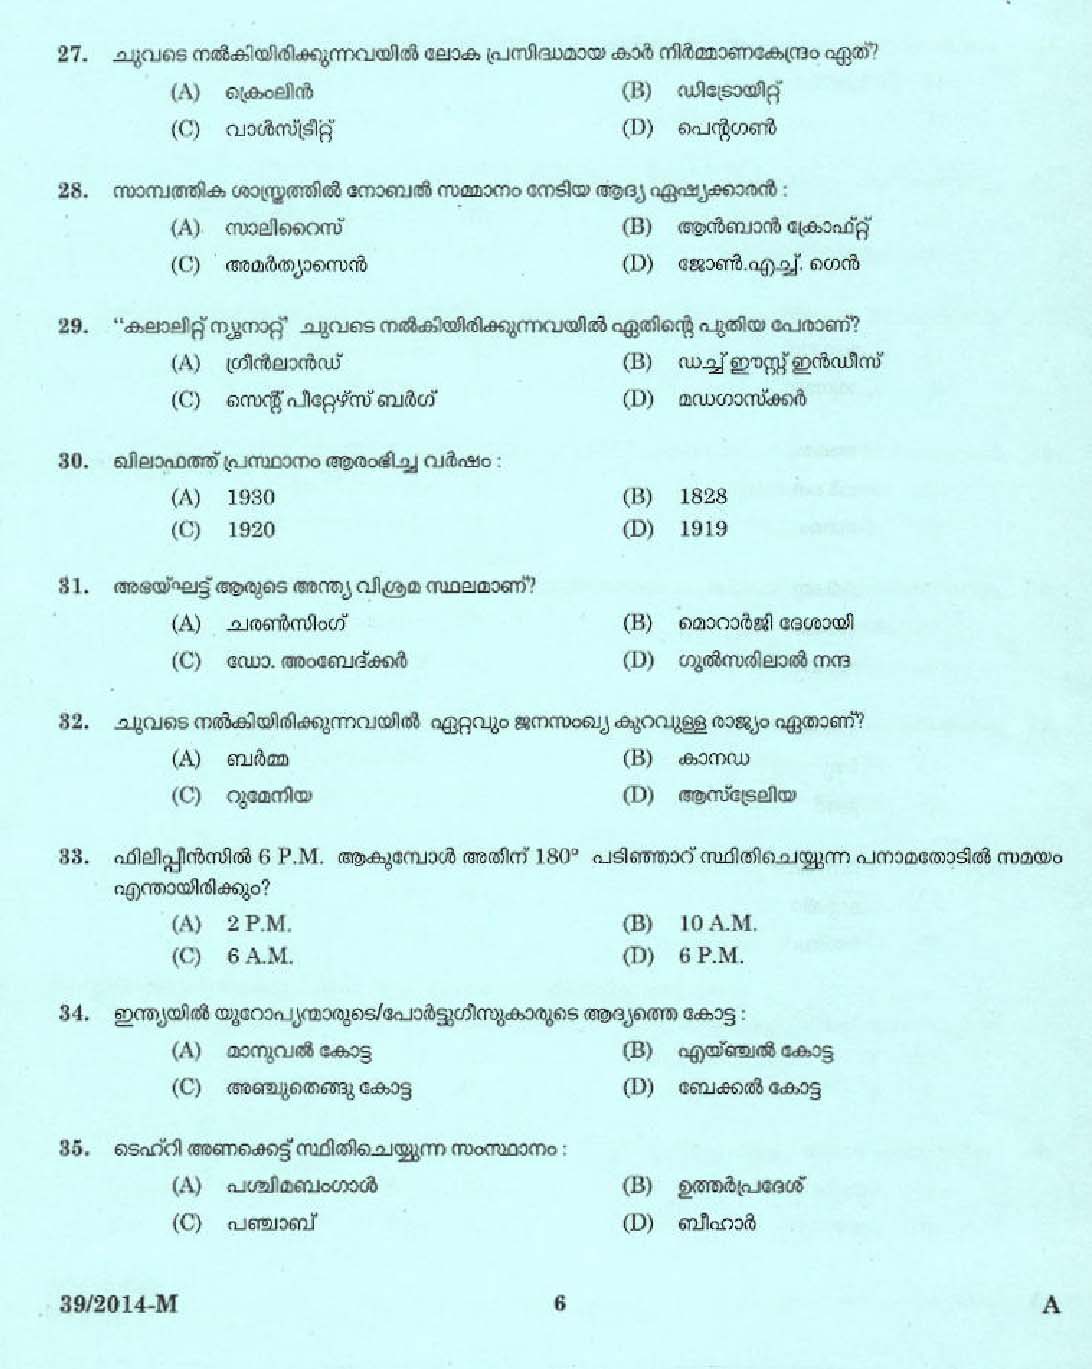 KPSC Male Warder Exam 2014 Code 392014 4